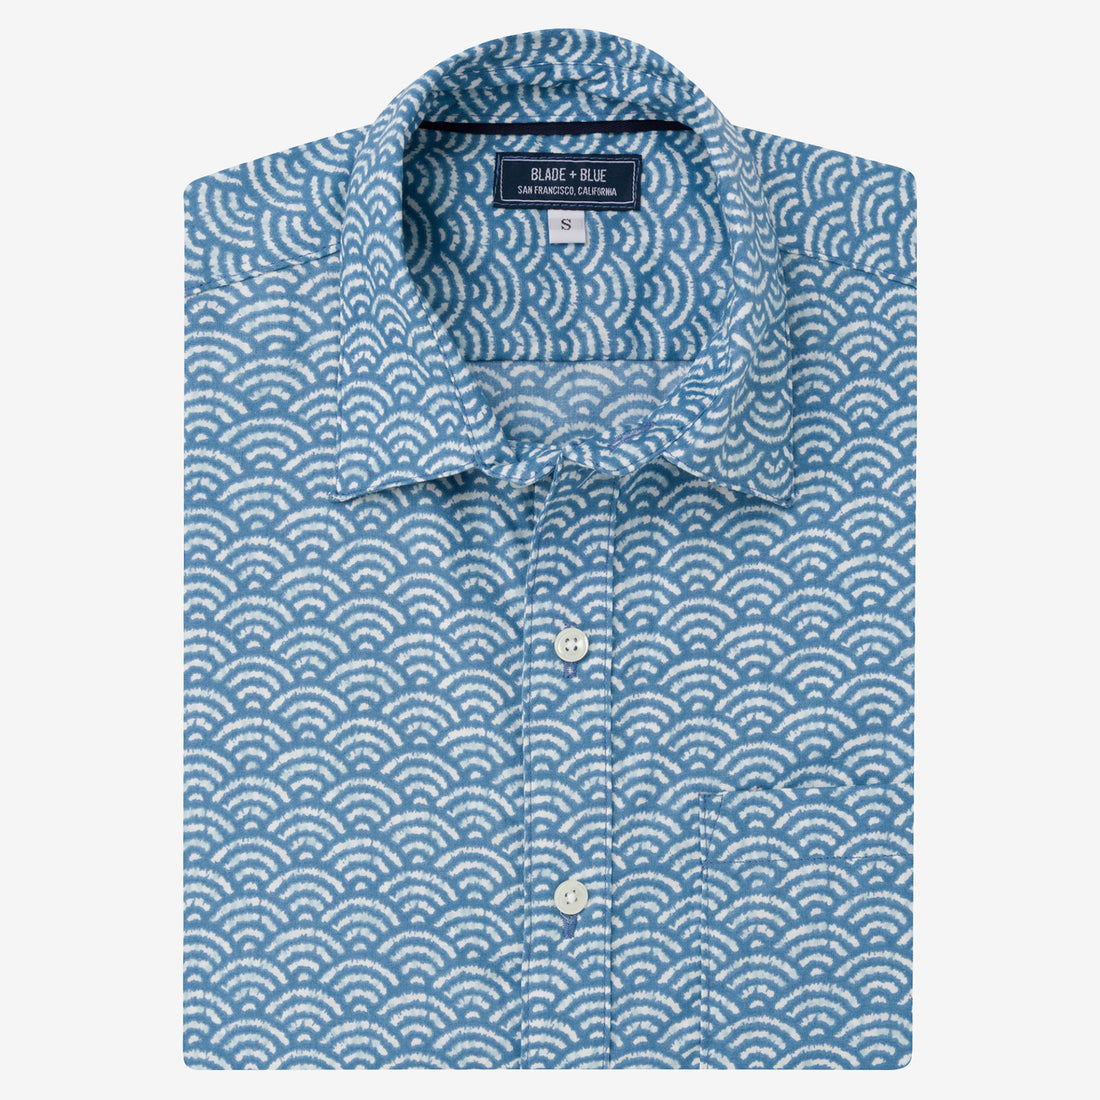 BEAU Short Sleeve Shirt in Inky Blue Japanese Wave Print